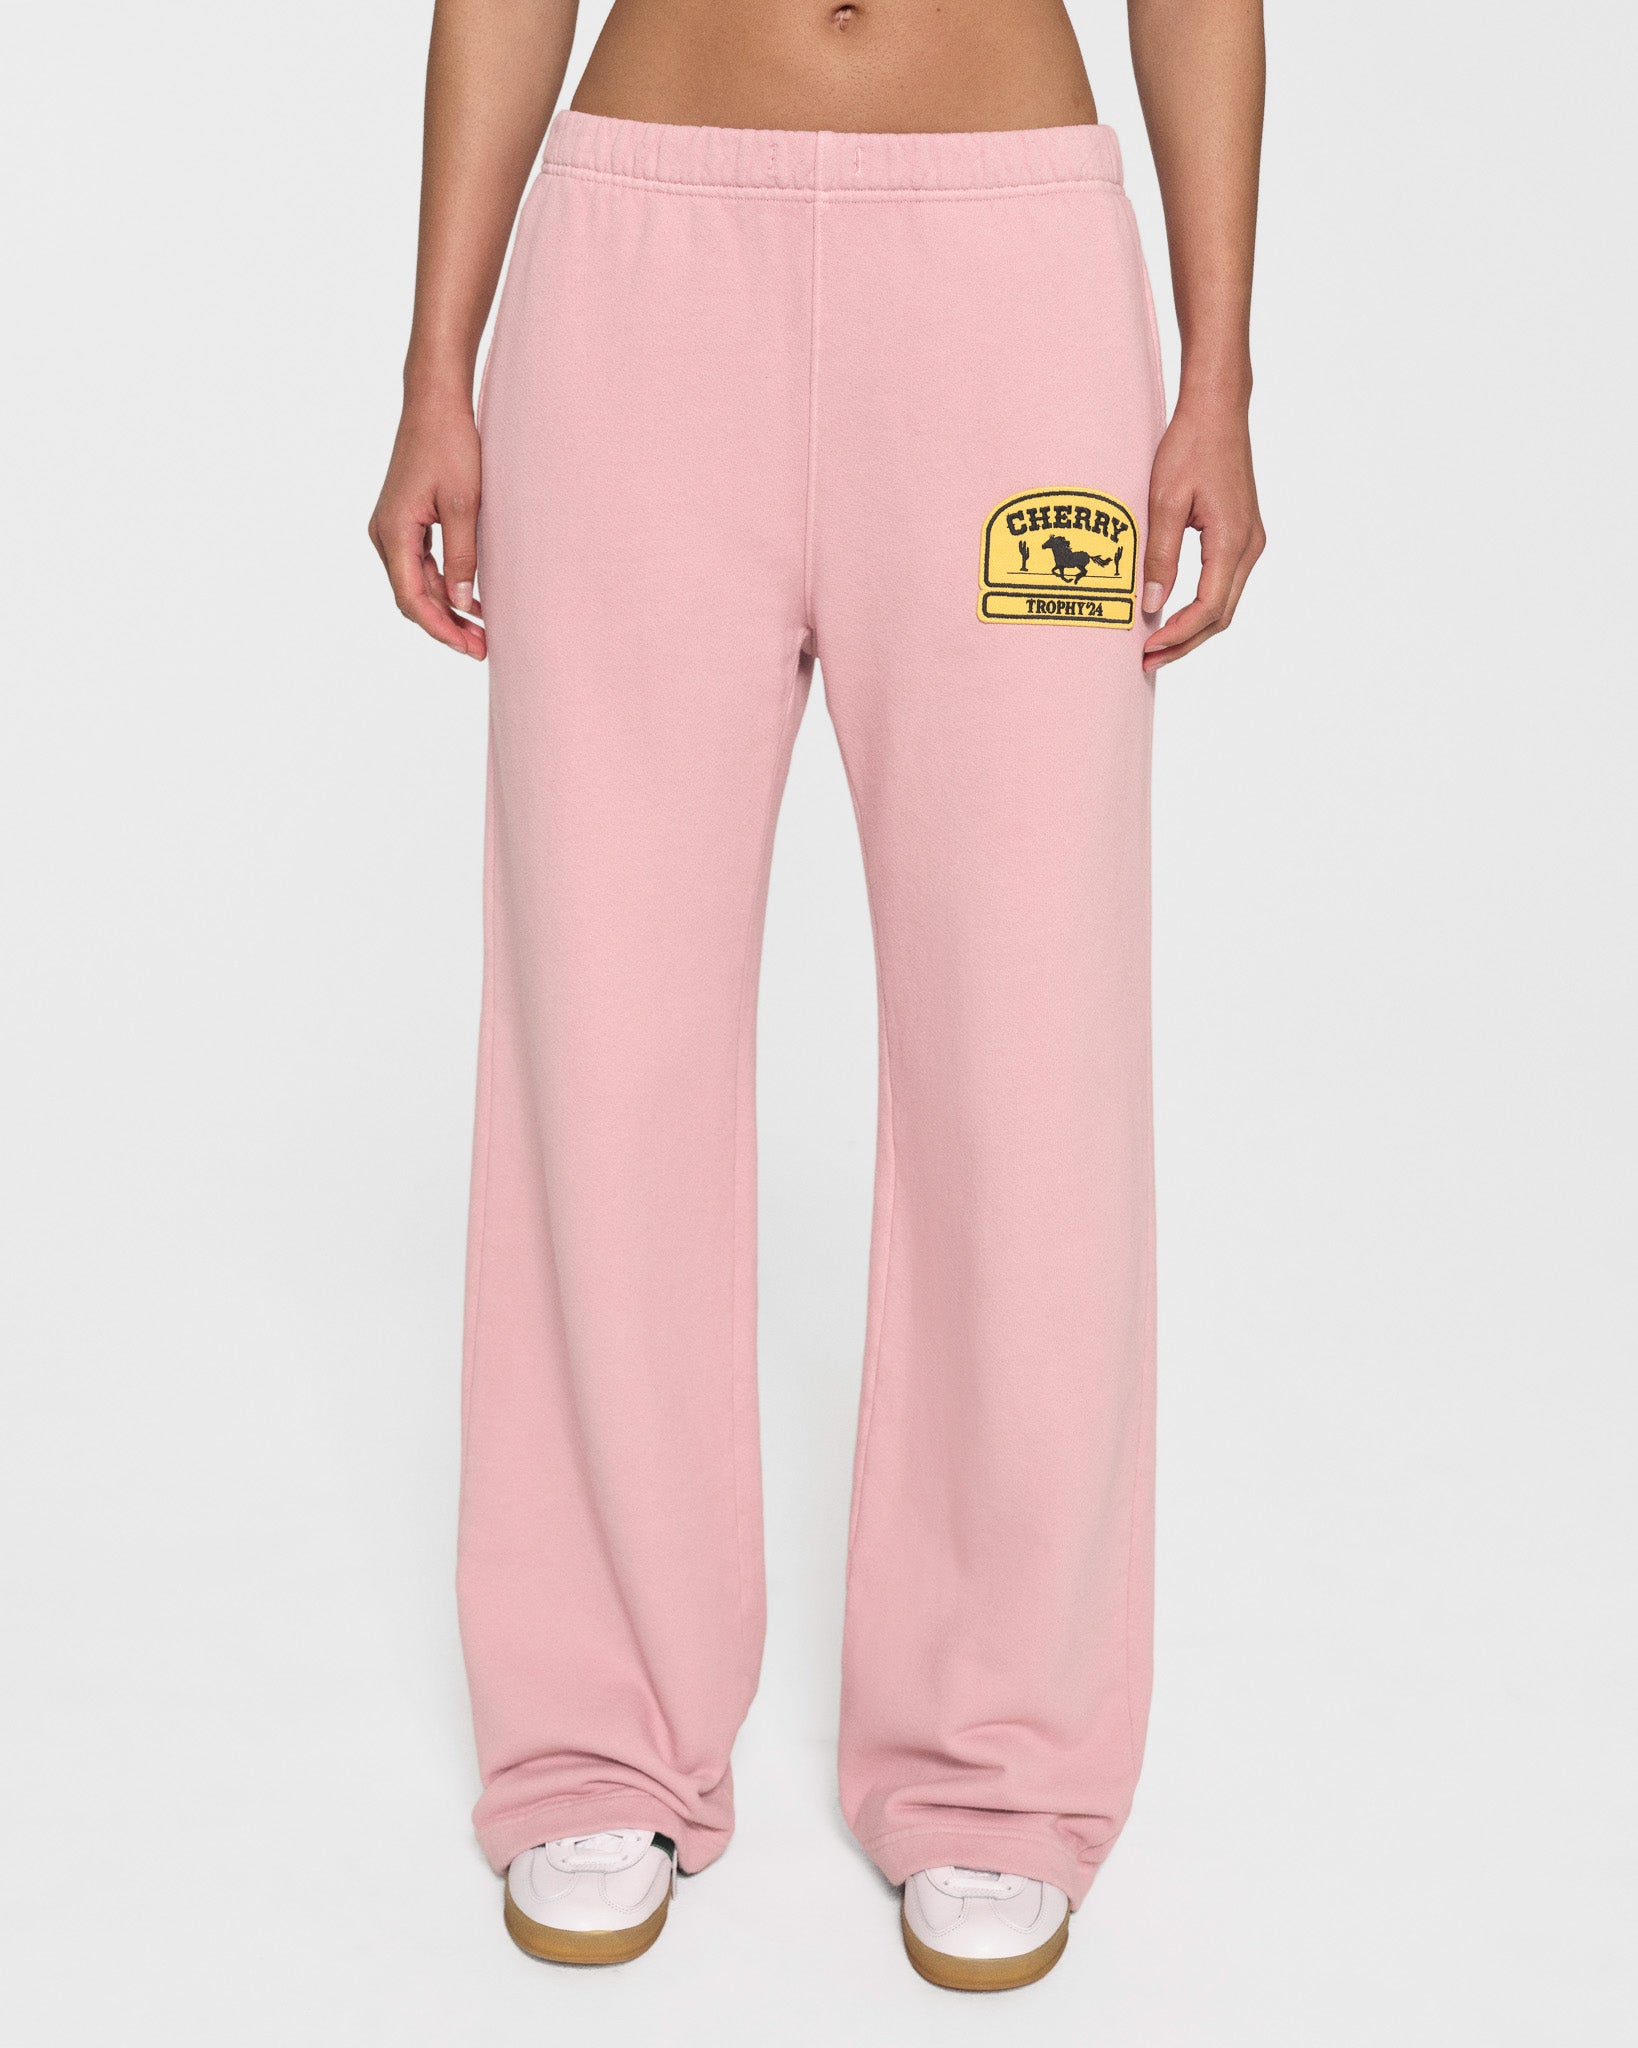 Women's Sweatpants (Pink)